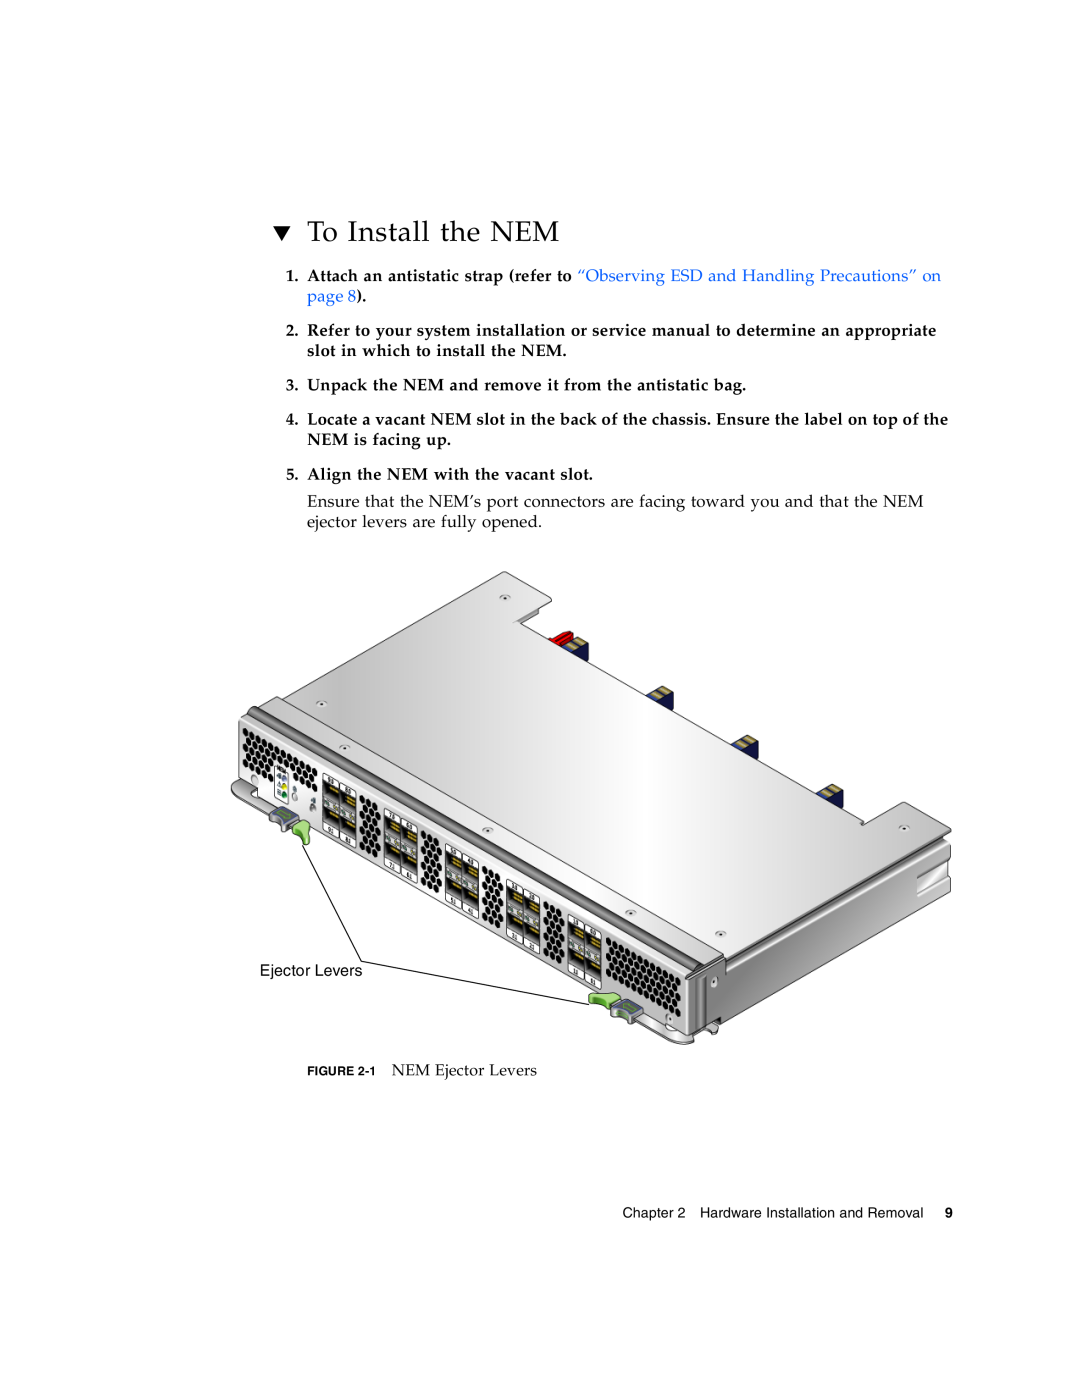 Sun Microsystems 2.0 manual To Install the NEM 